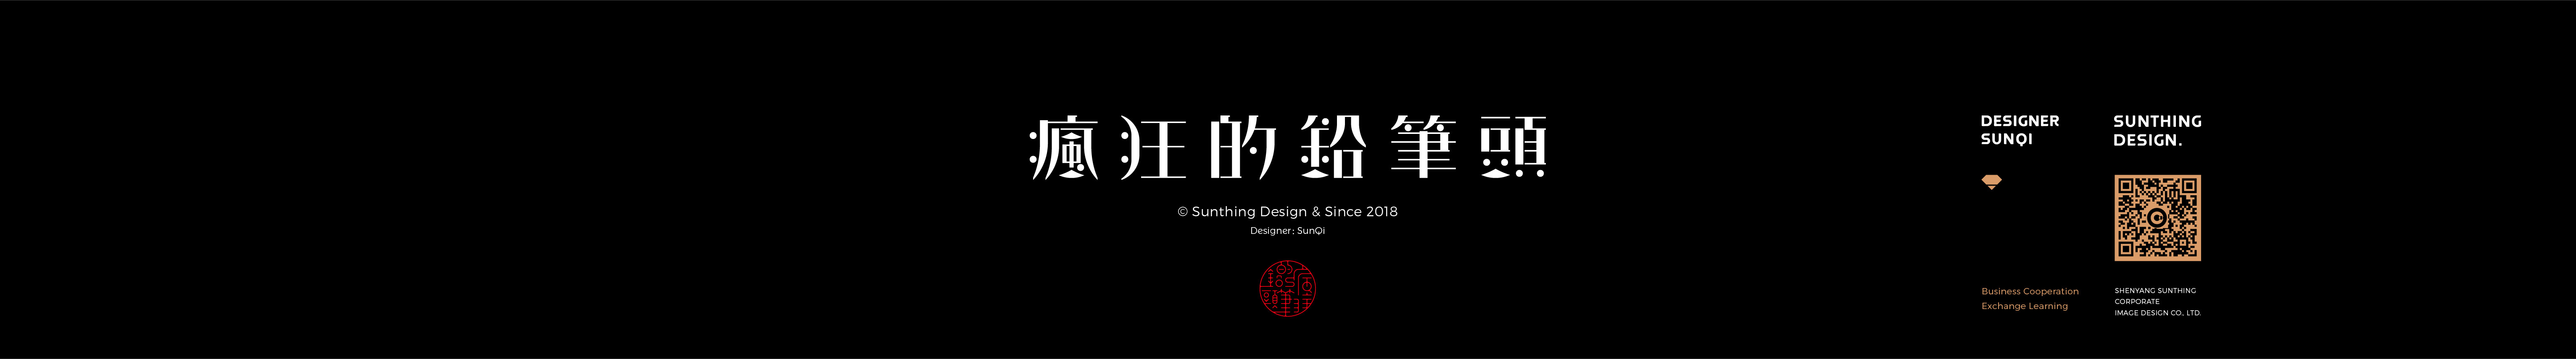 Sunthing Sun's profile banner